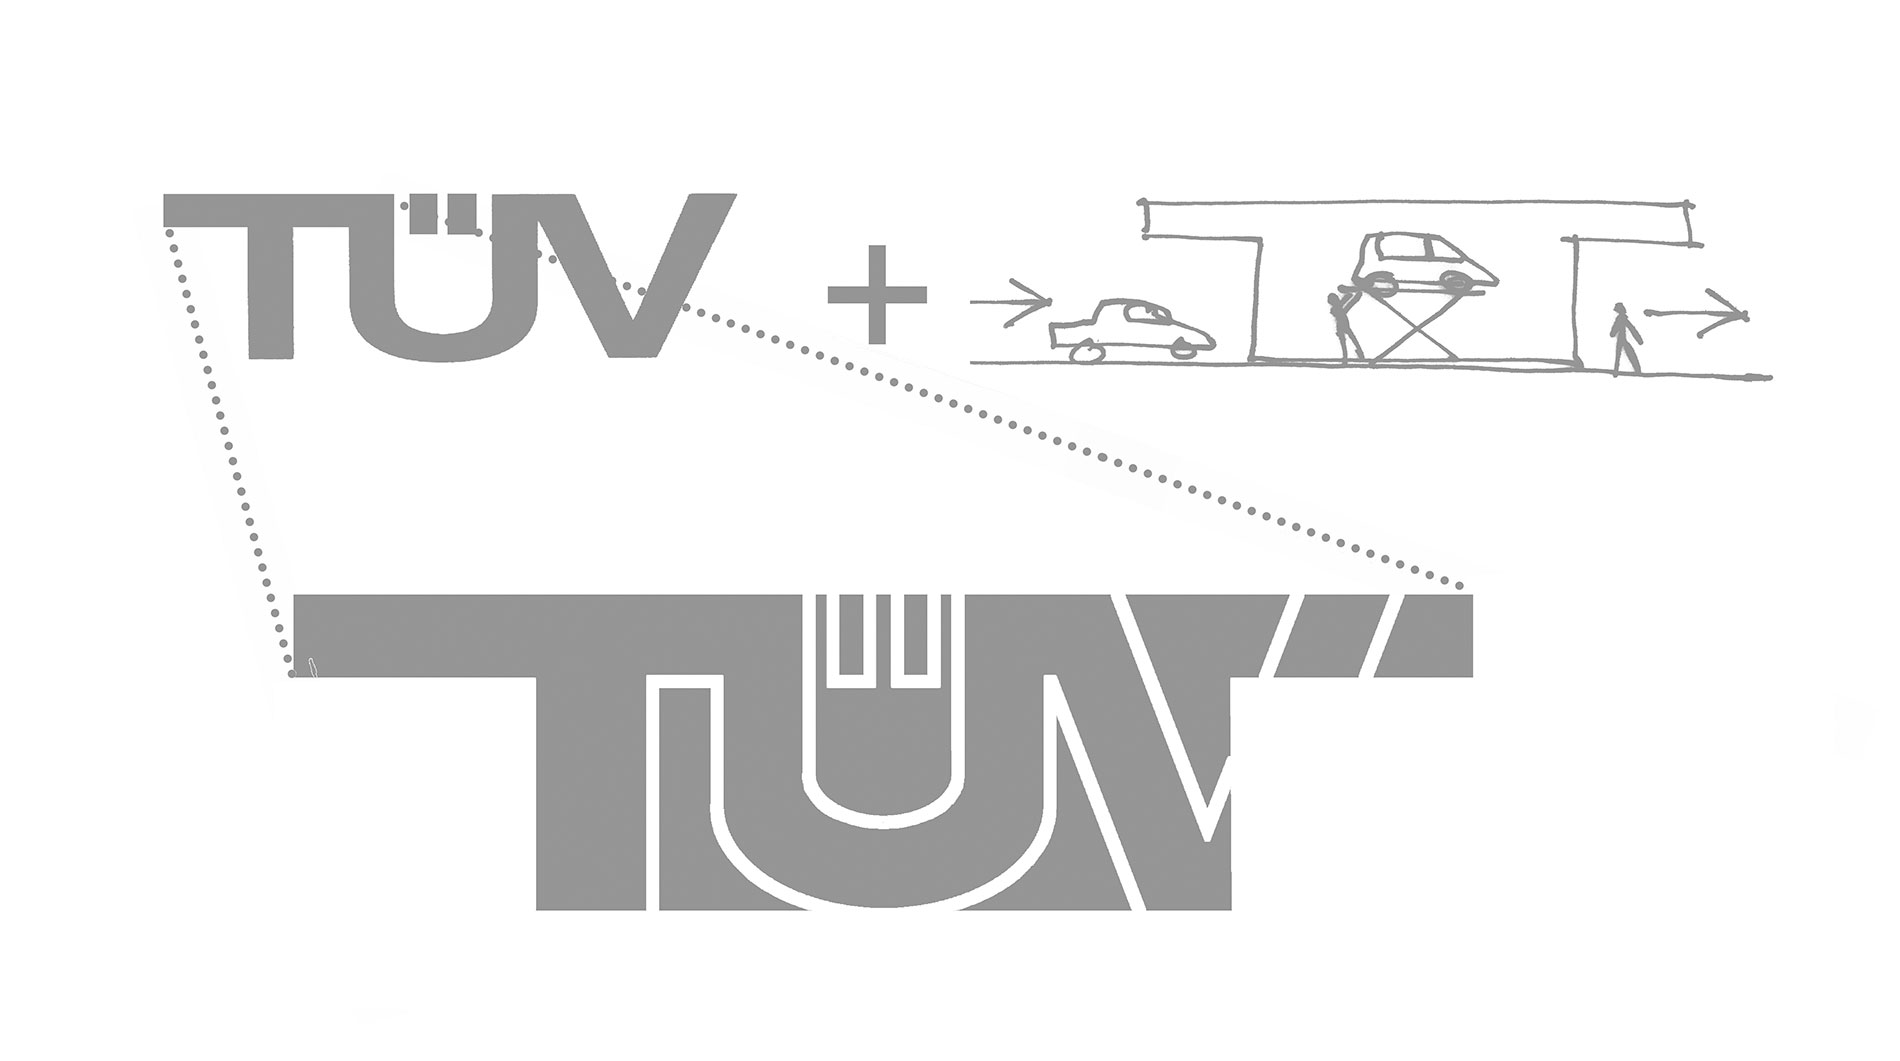 TUEV SUED logo